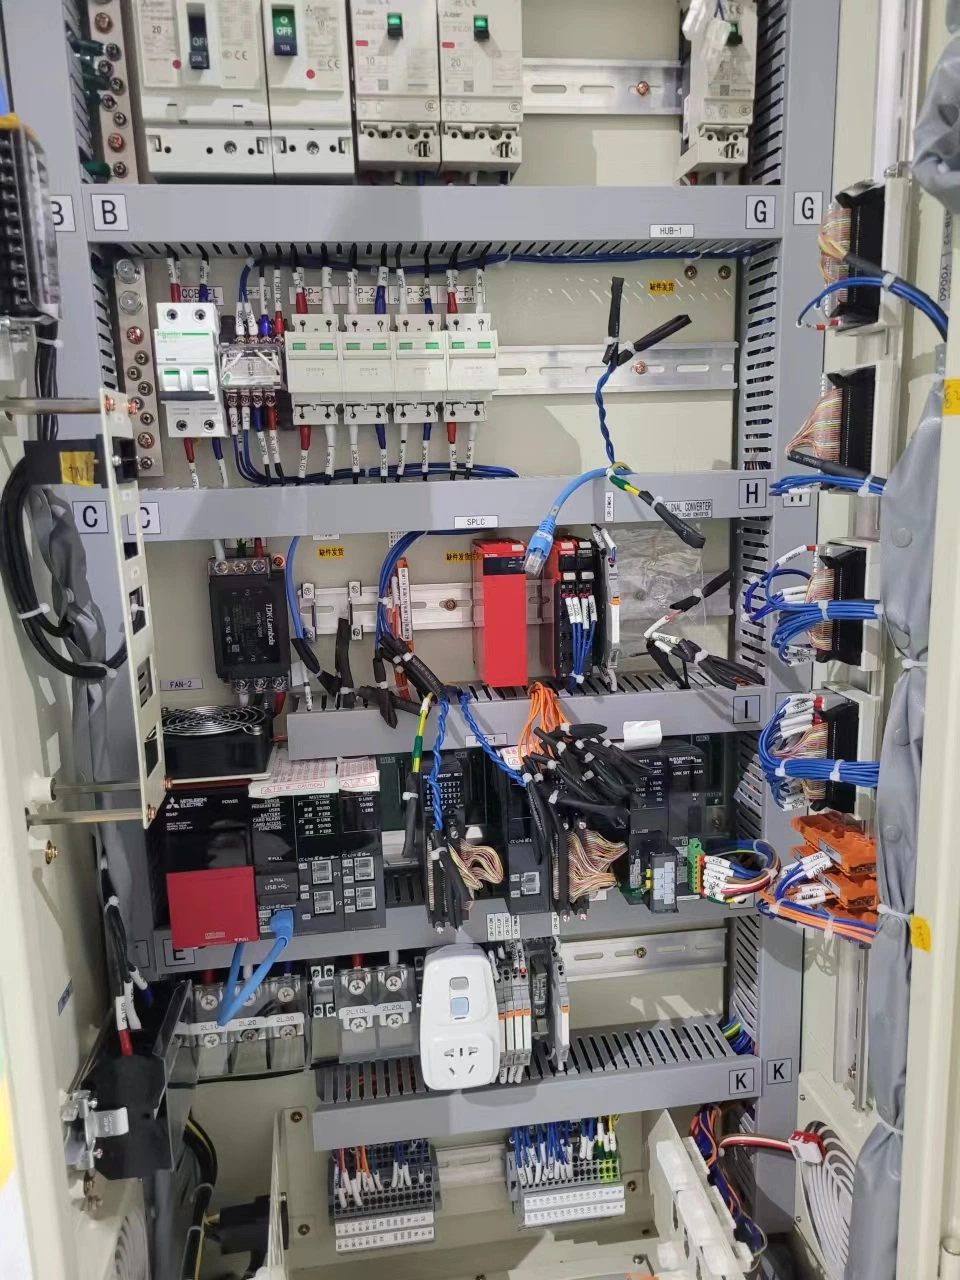 Yy-Q71 Main Distribution Panel Electrical Circuit Breaker Control Panel